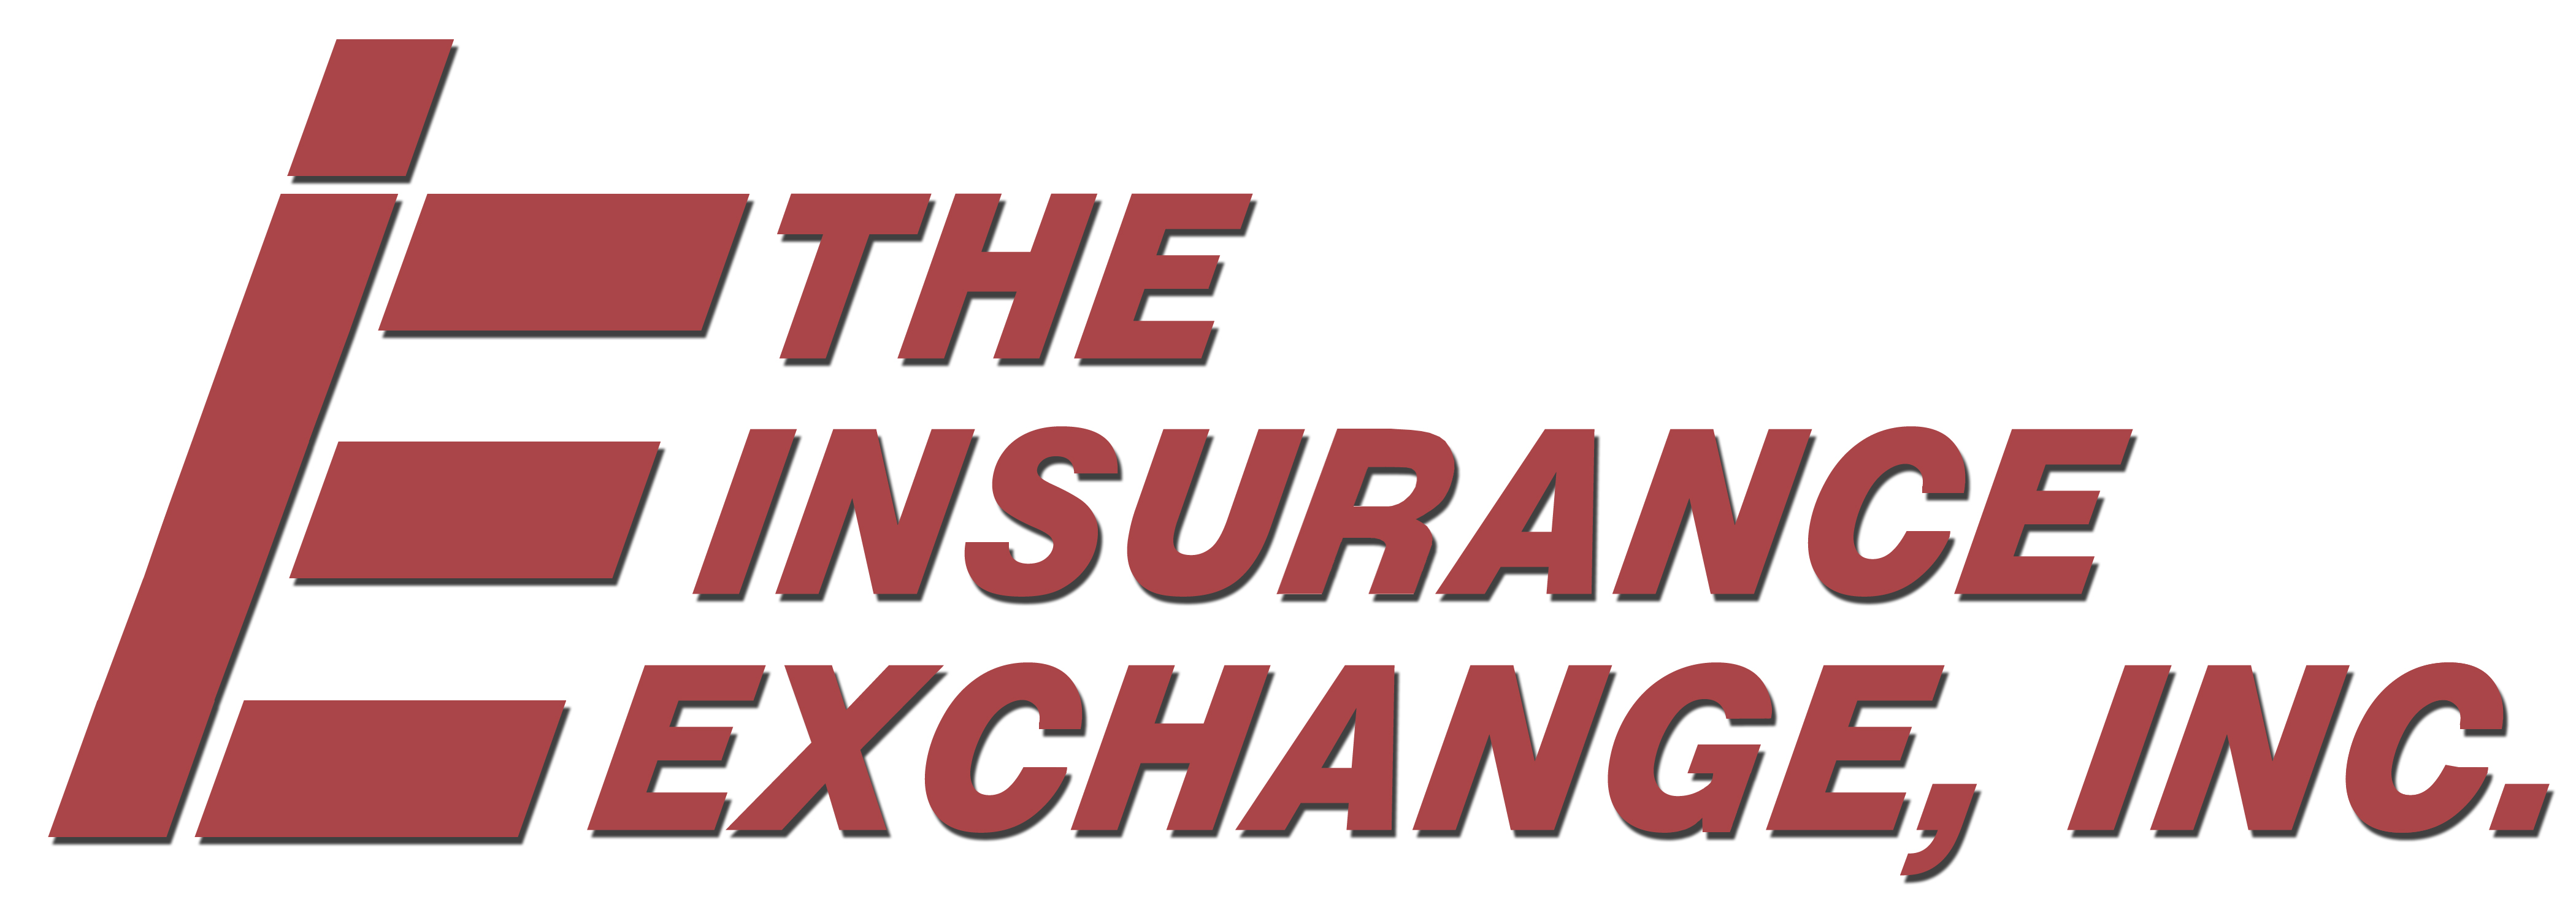 The Insurance Exchange, Inc